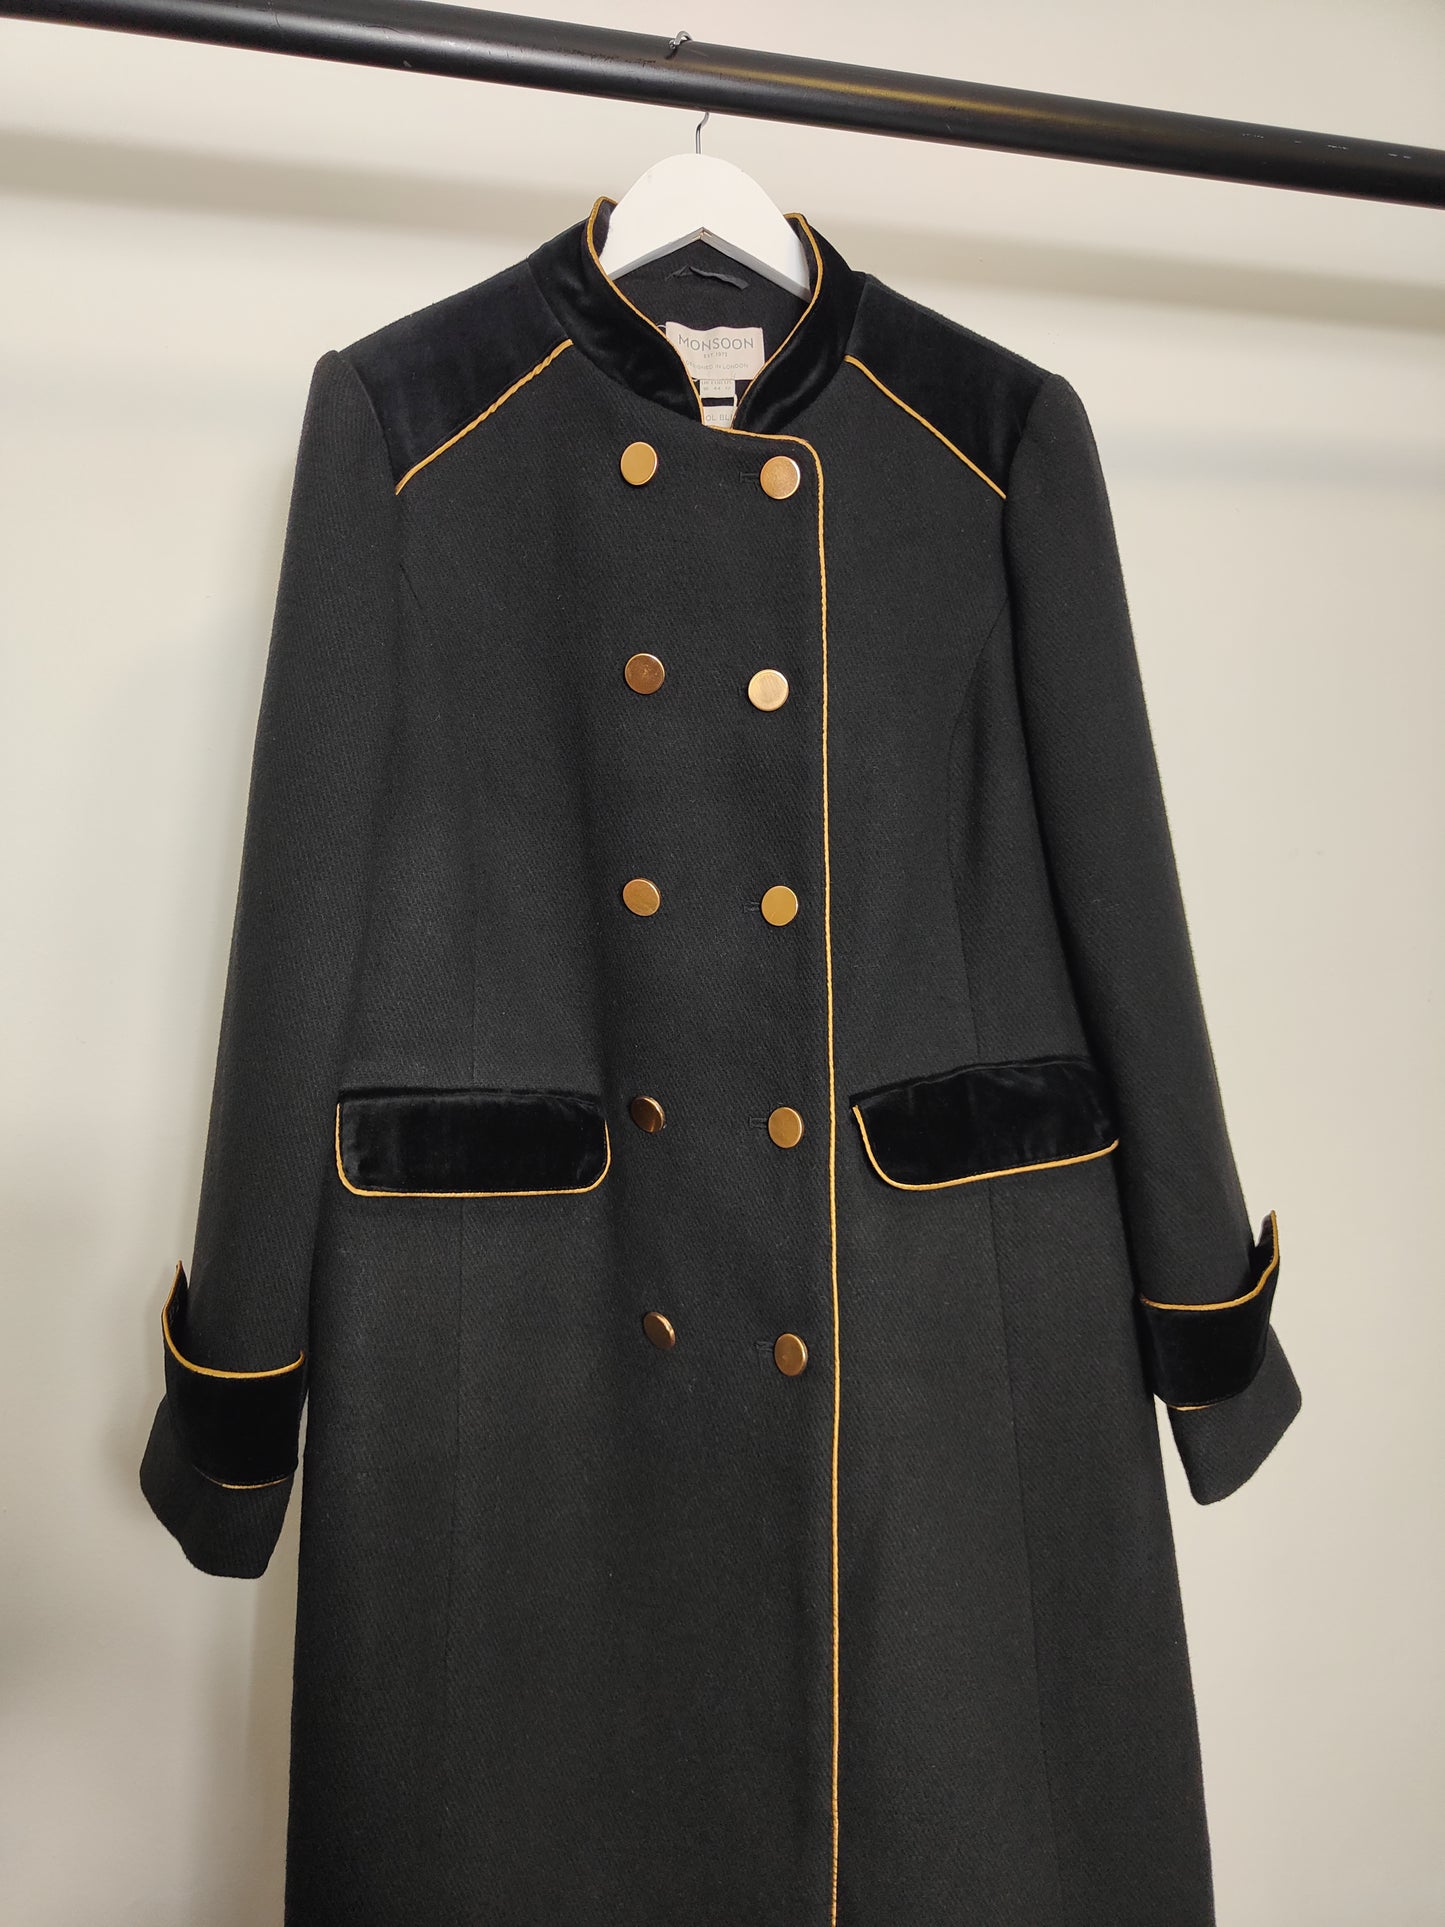 Women's Military Jacket Wool Blend Double Breasted Coat in Black UK 16 / EU 44